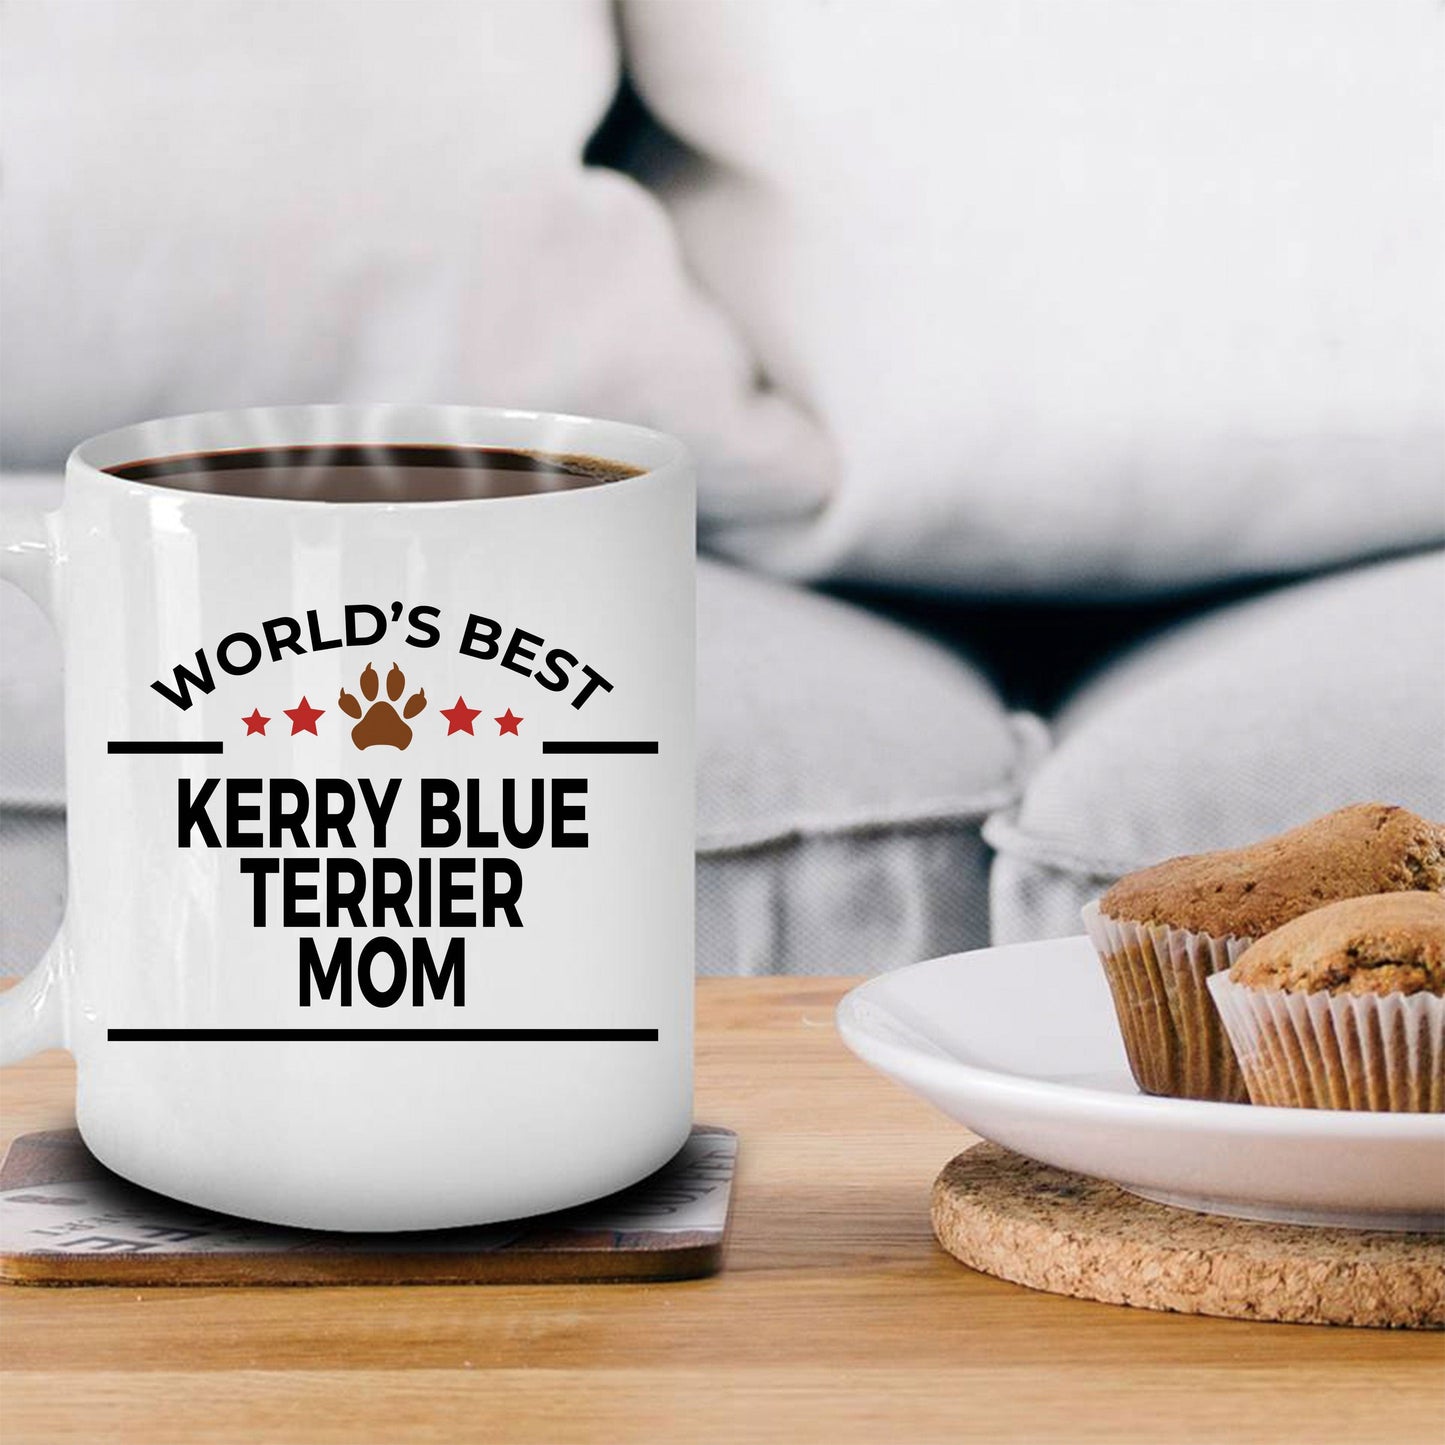 Kerry Blue Terrier Dog Lover Gift World's Best Mom Birthday Mother's Day White Ceramic Coffee Mug